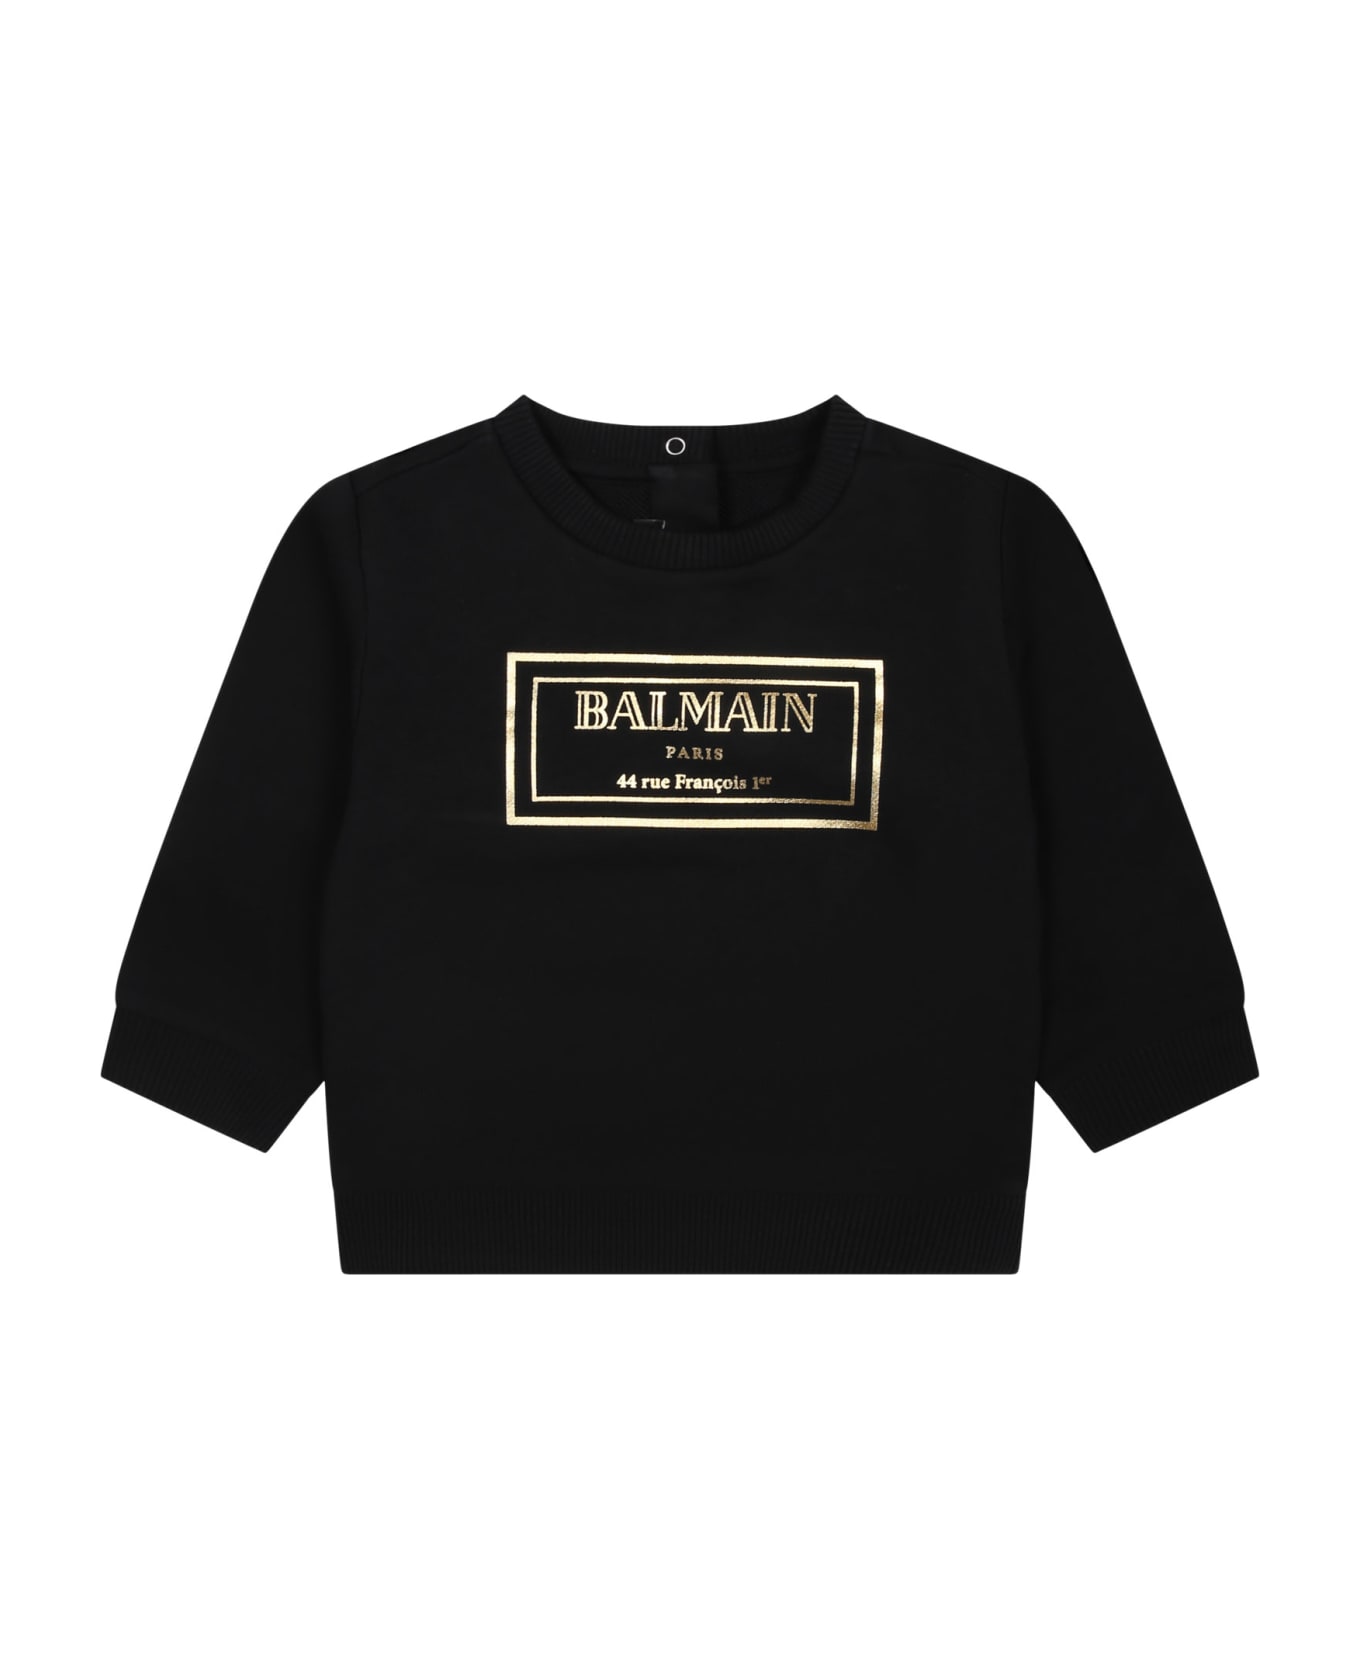 Balmain Black Sweatshirt For Babies With Gold Logo - Black